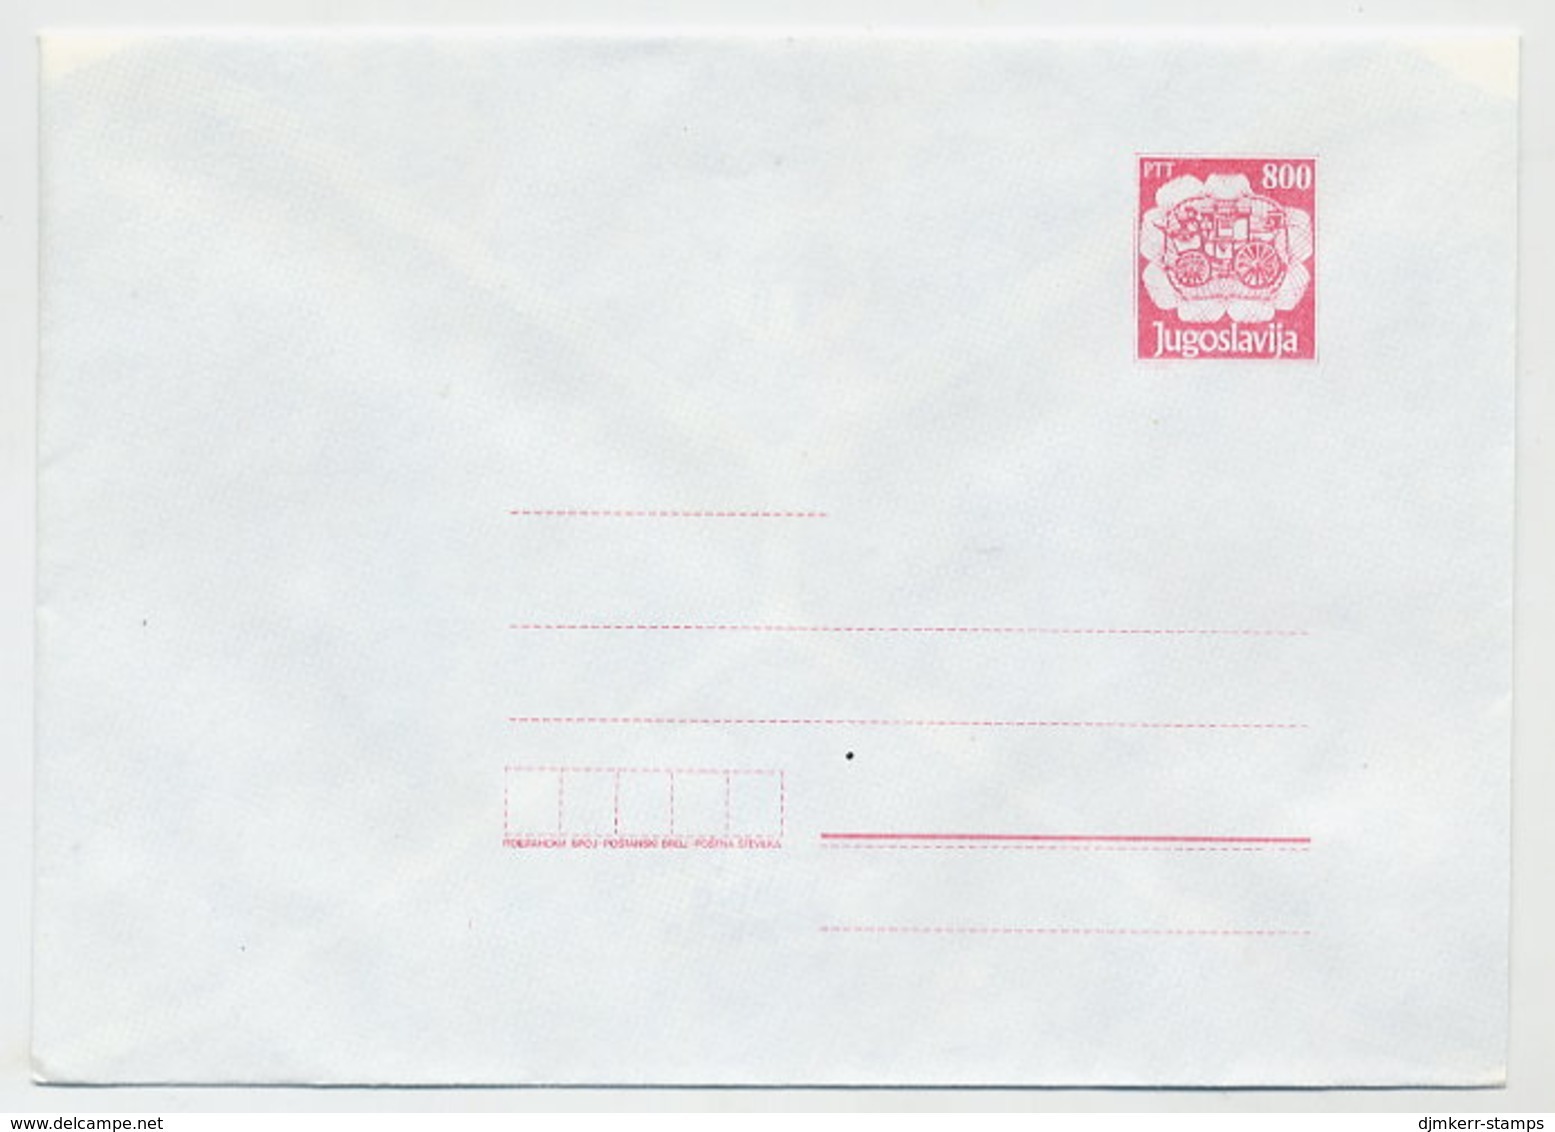 YUGOSLAVIA 1989 Postal Coach 800. D. Envelope, Unused.  Michel U91 - Postal Stationery